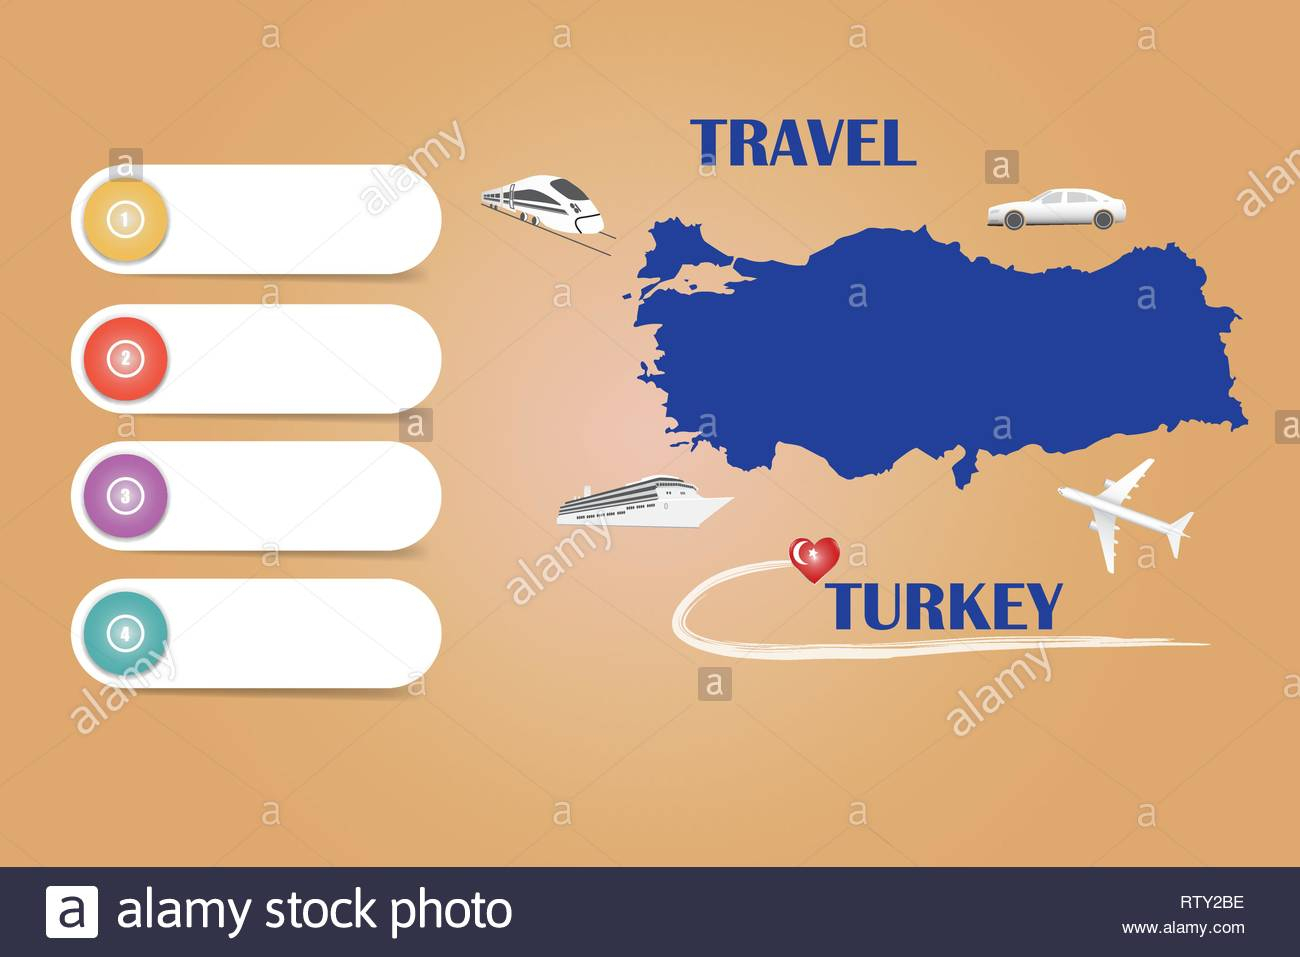 Travel Turkey Template Vector For Travel Agencies Etc Regarding Blank Turkey Template